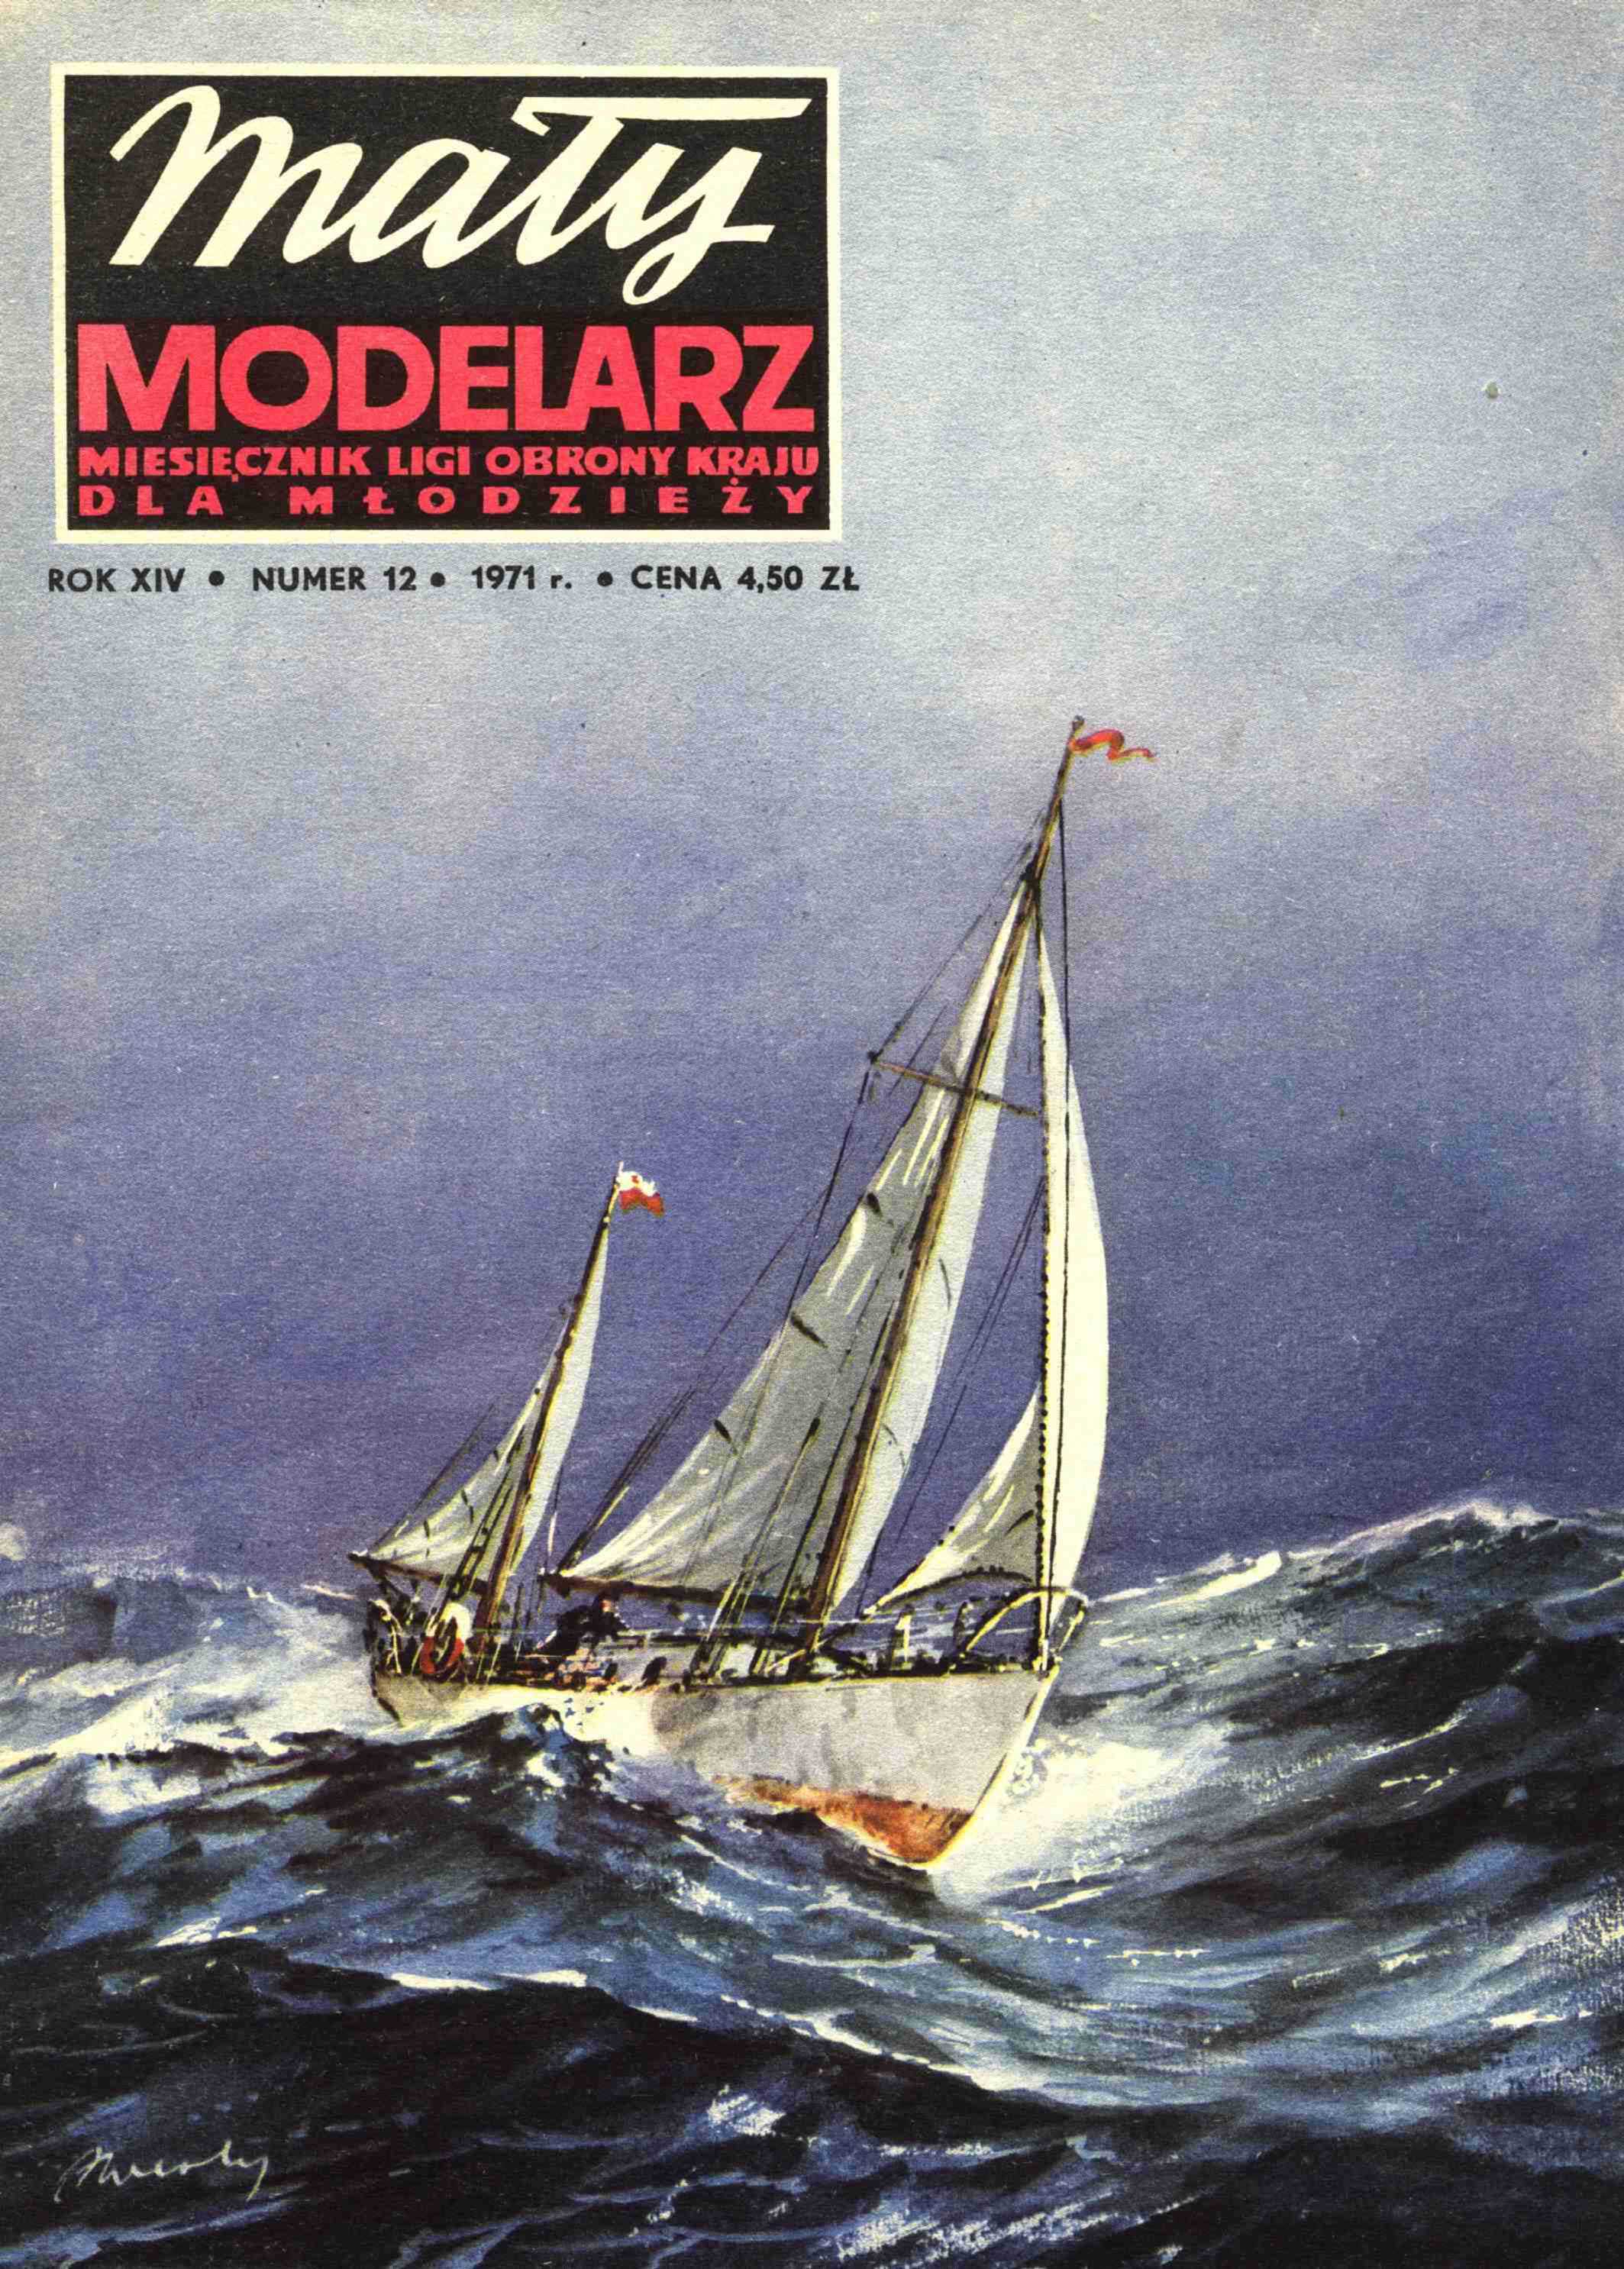 "Maly Modelarz" 7-8, 1994